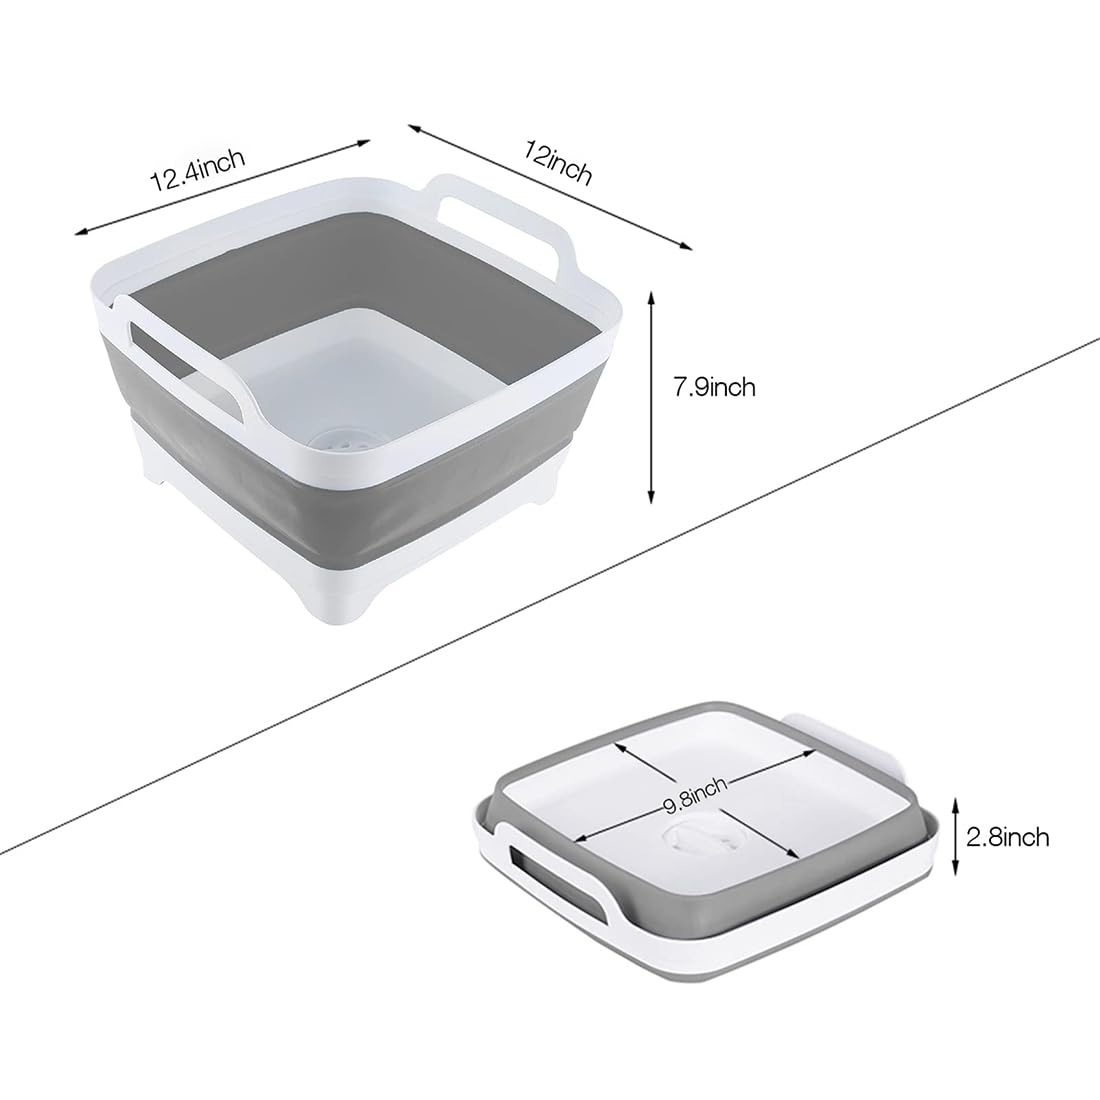 Otiyer Collapsible Dish Basin Foldable Sink Tub Kitchen Storage Tray with Drain Plug 9L Capacity Portable Dish Tub Multiuse Dishpan Dish Washing Tub for Camping, Vegetable Washing, RV